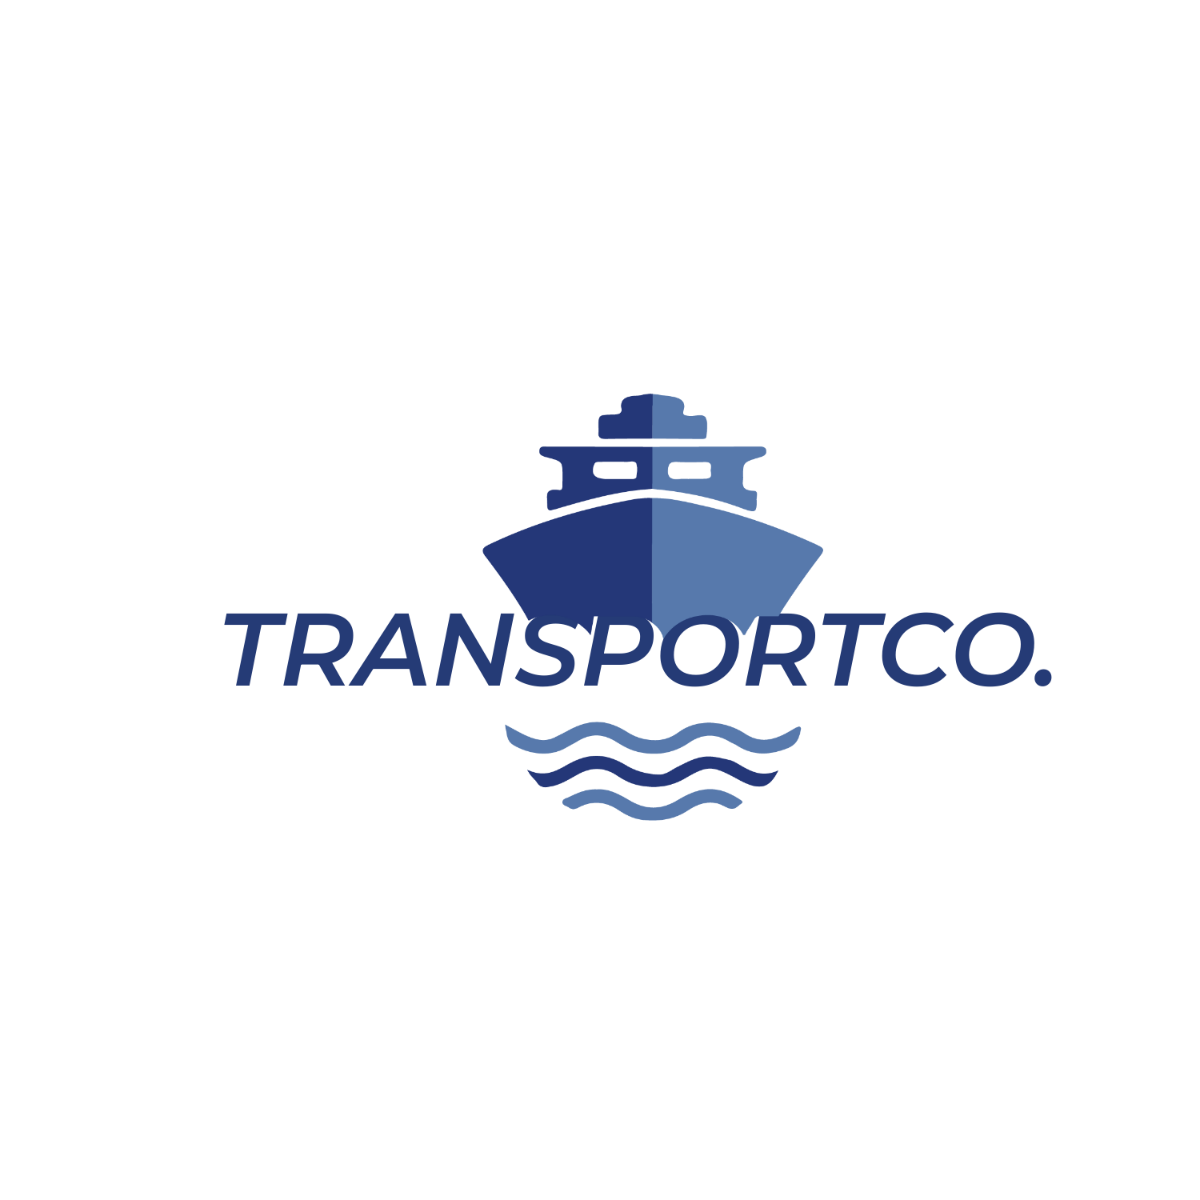 Transport and Logistics Maritime Shipping Company Logo Template